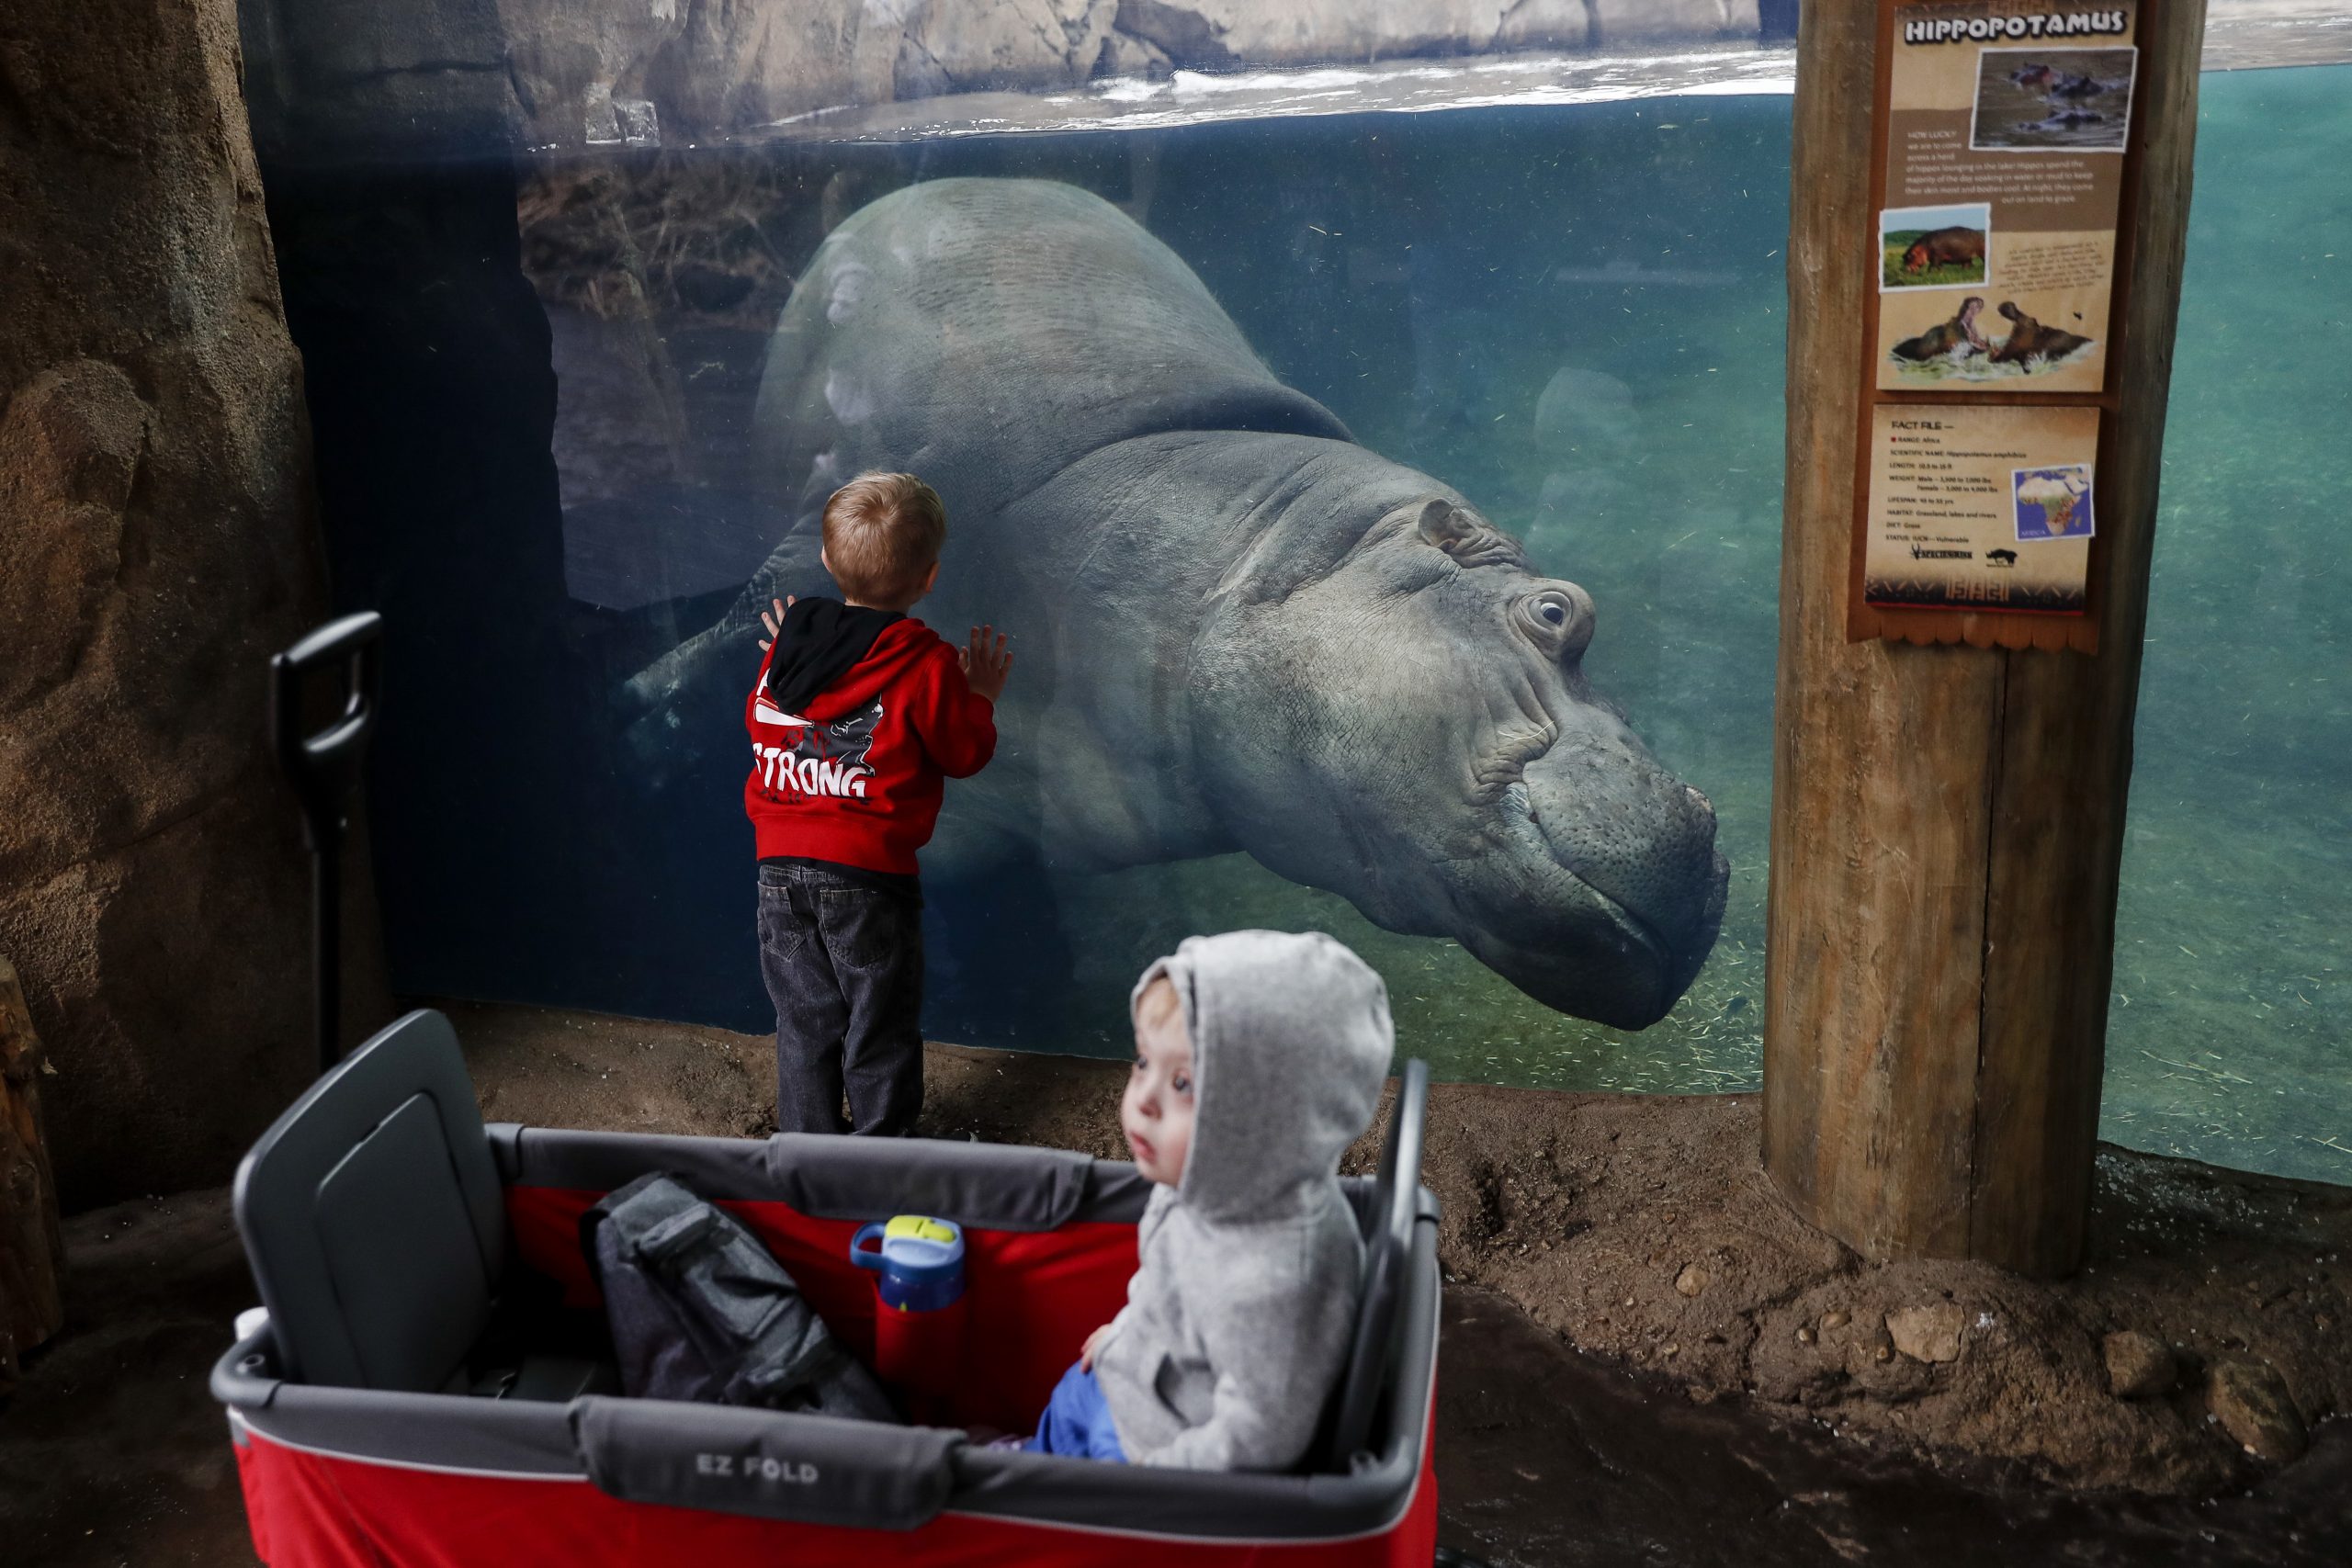 WATCH: Bibi the hippo is on birth watch at Cincinnati Zoo - Washington Examiner